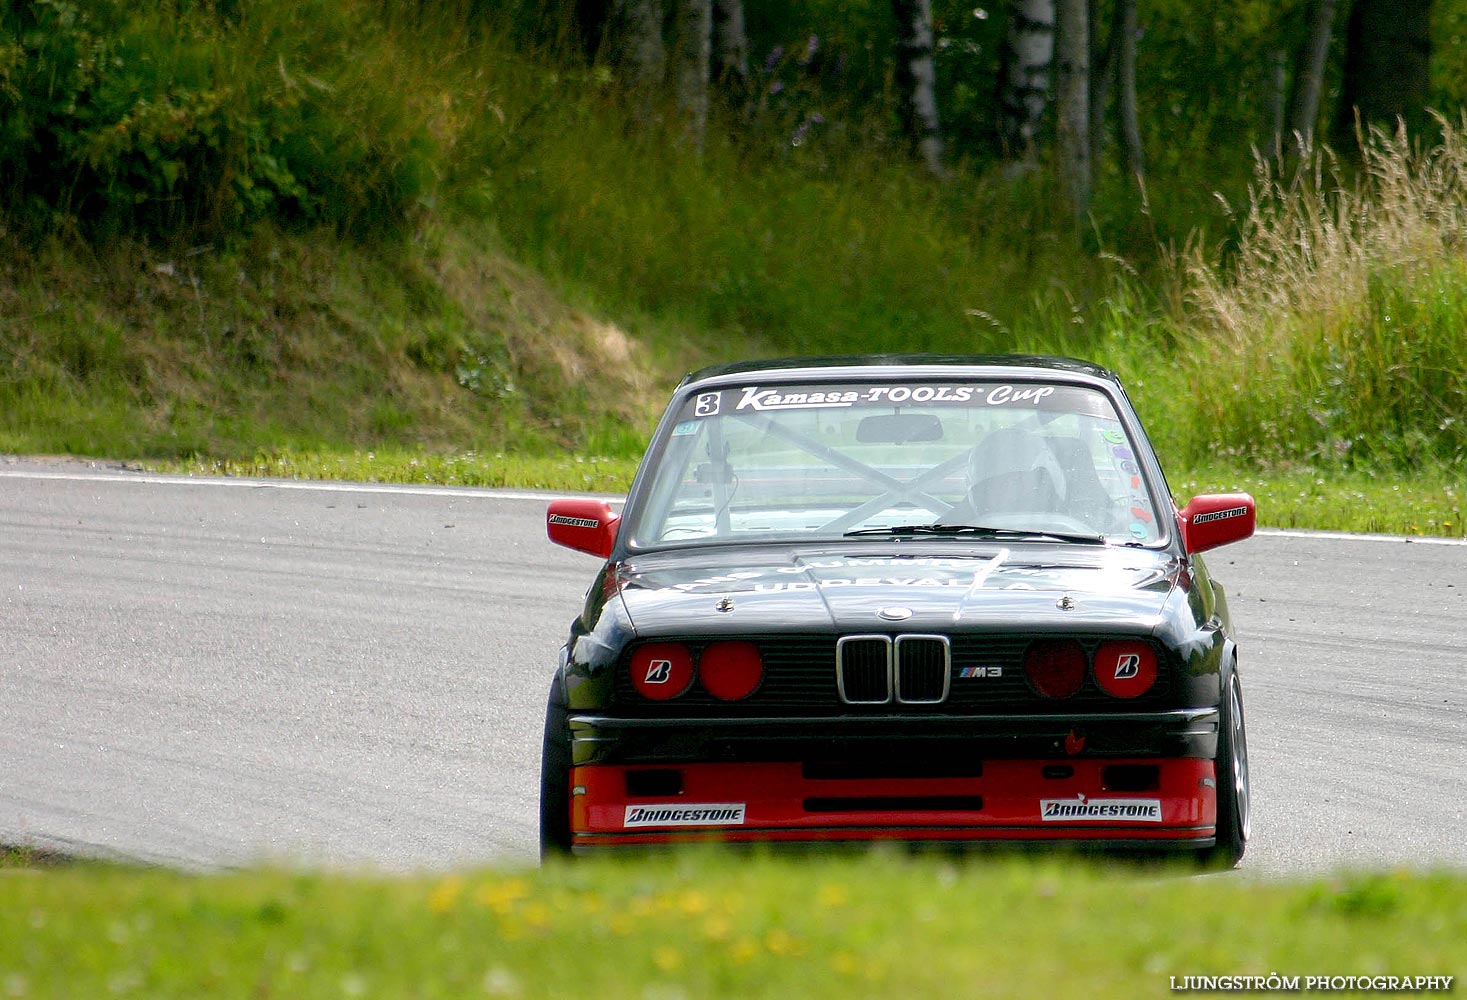 SSK Raceweek,mix,Kinnekulle Ring,Götene,Sverige,Motorsport,,2004,92443